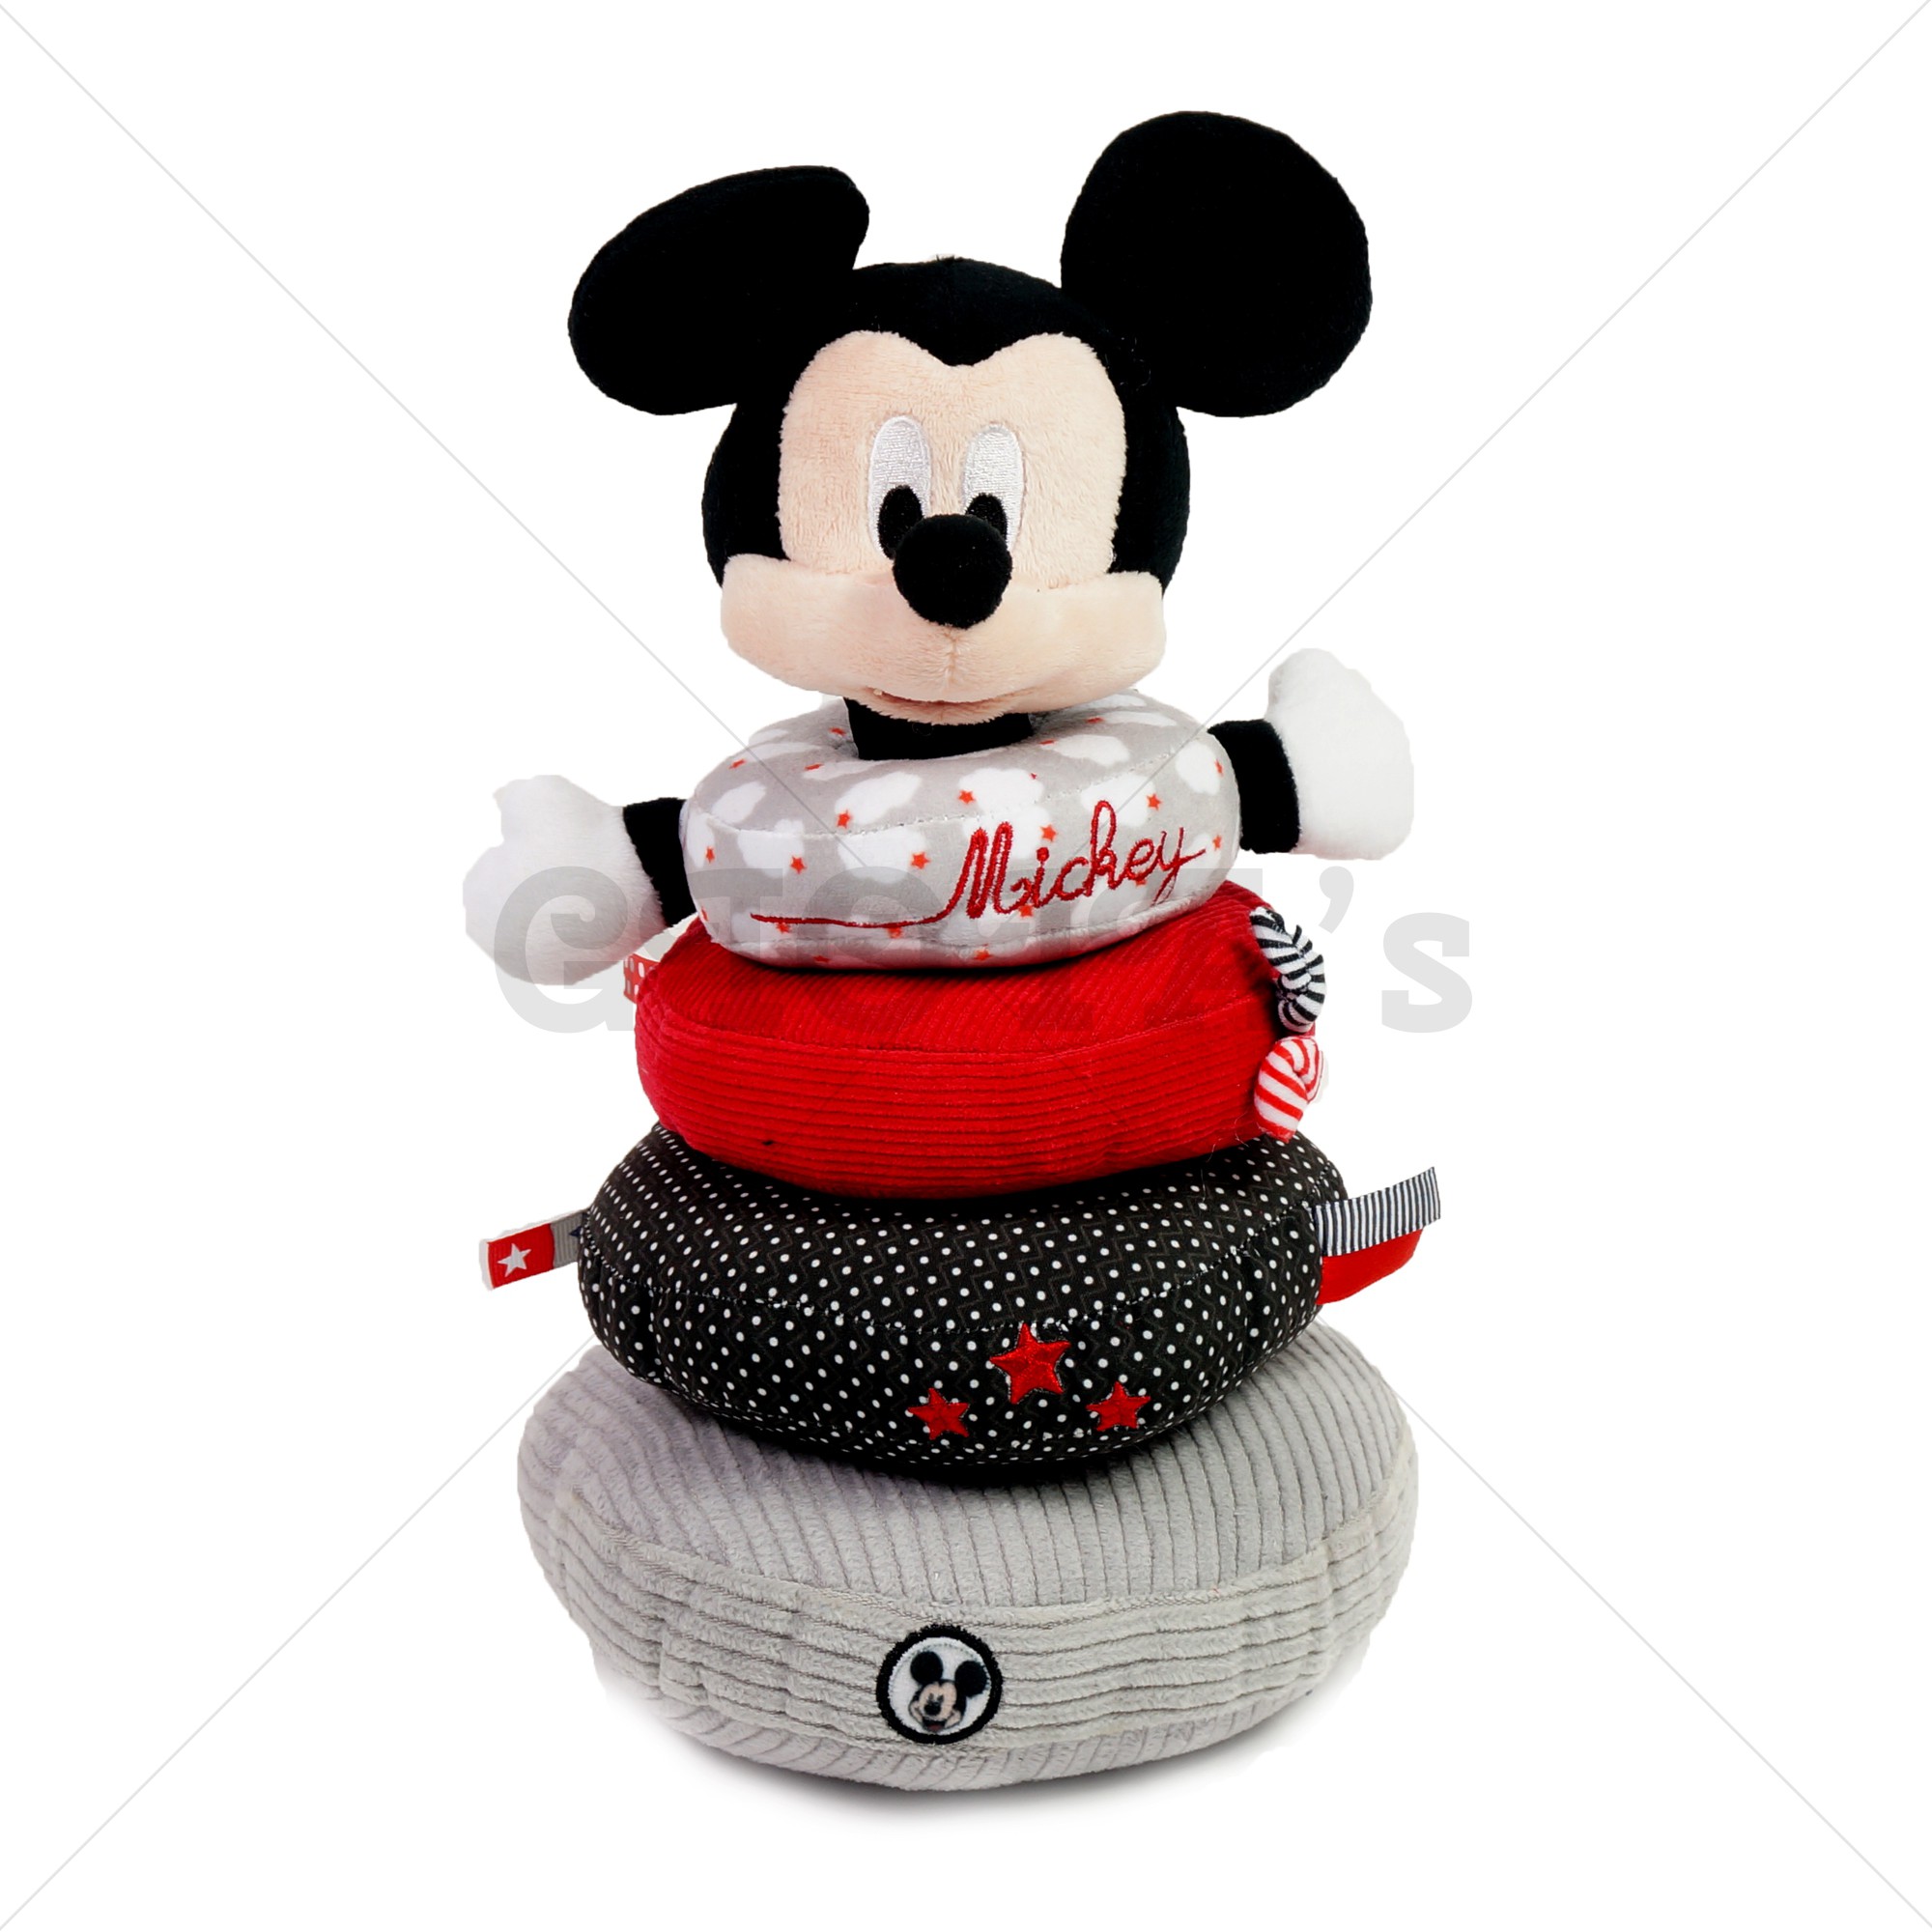 Disney Mouse baby stapeltoren - GIOIA's cadeau en